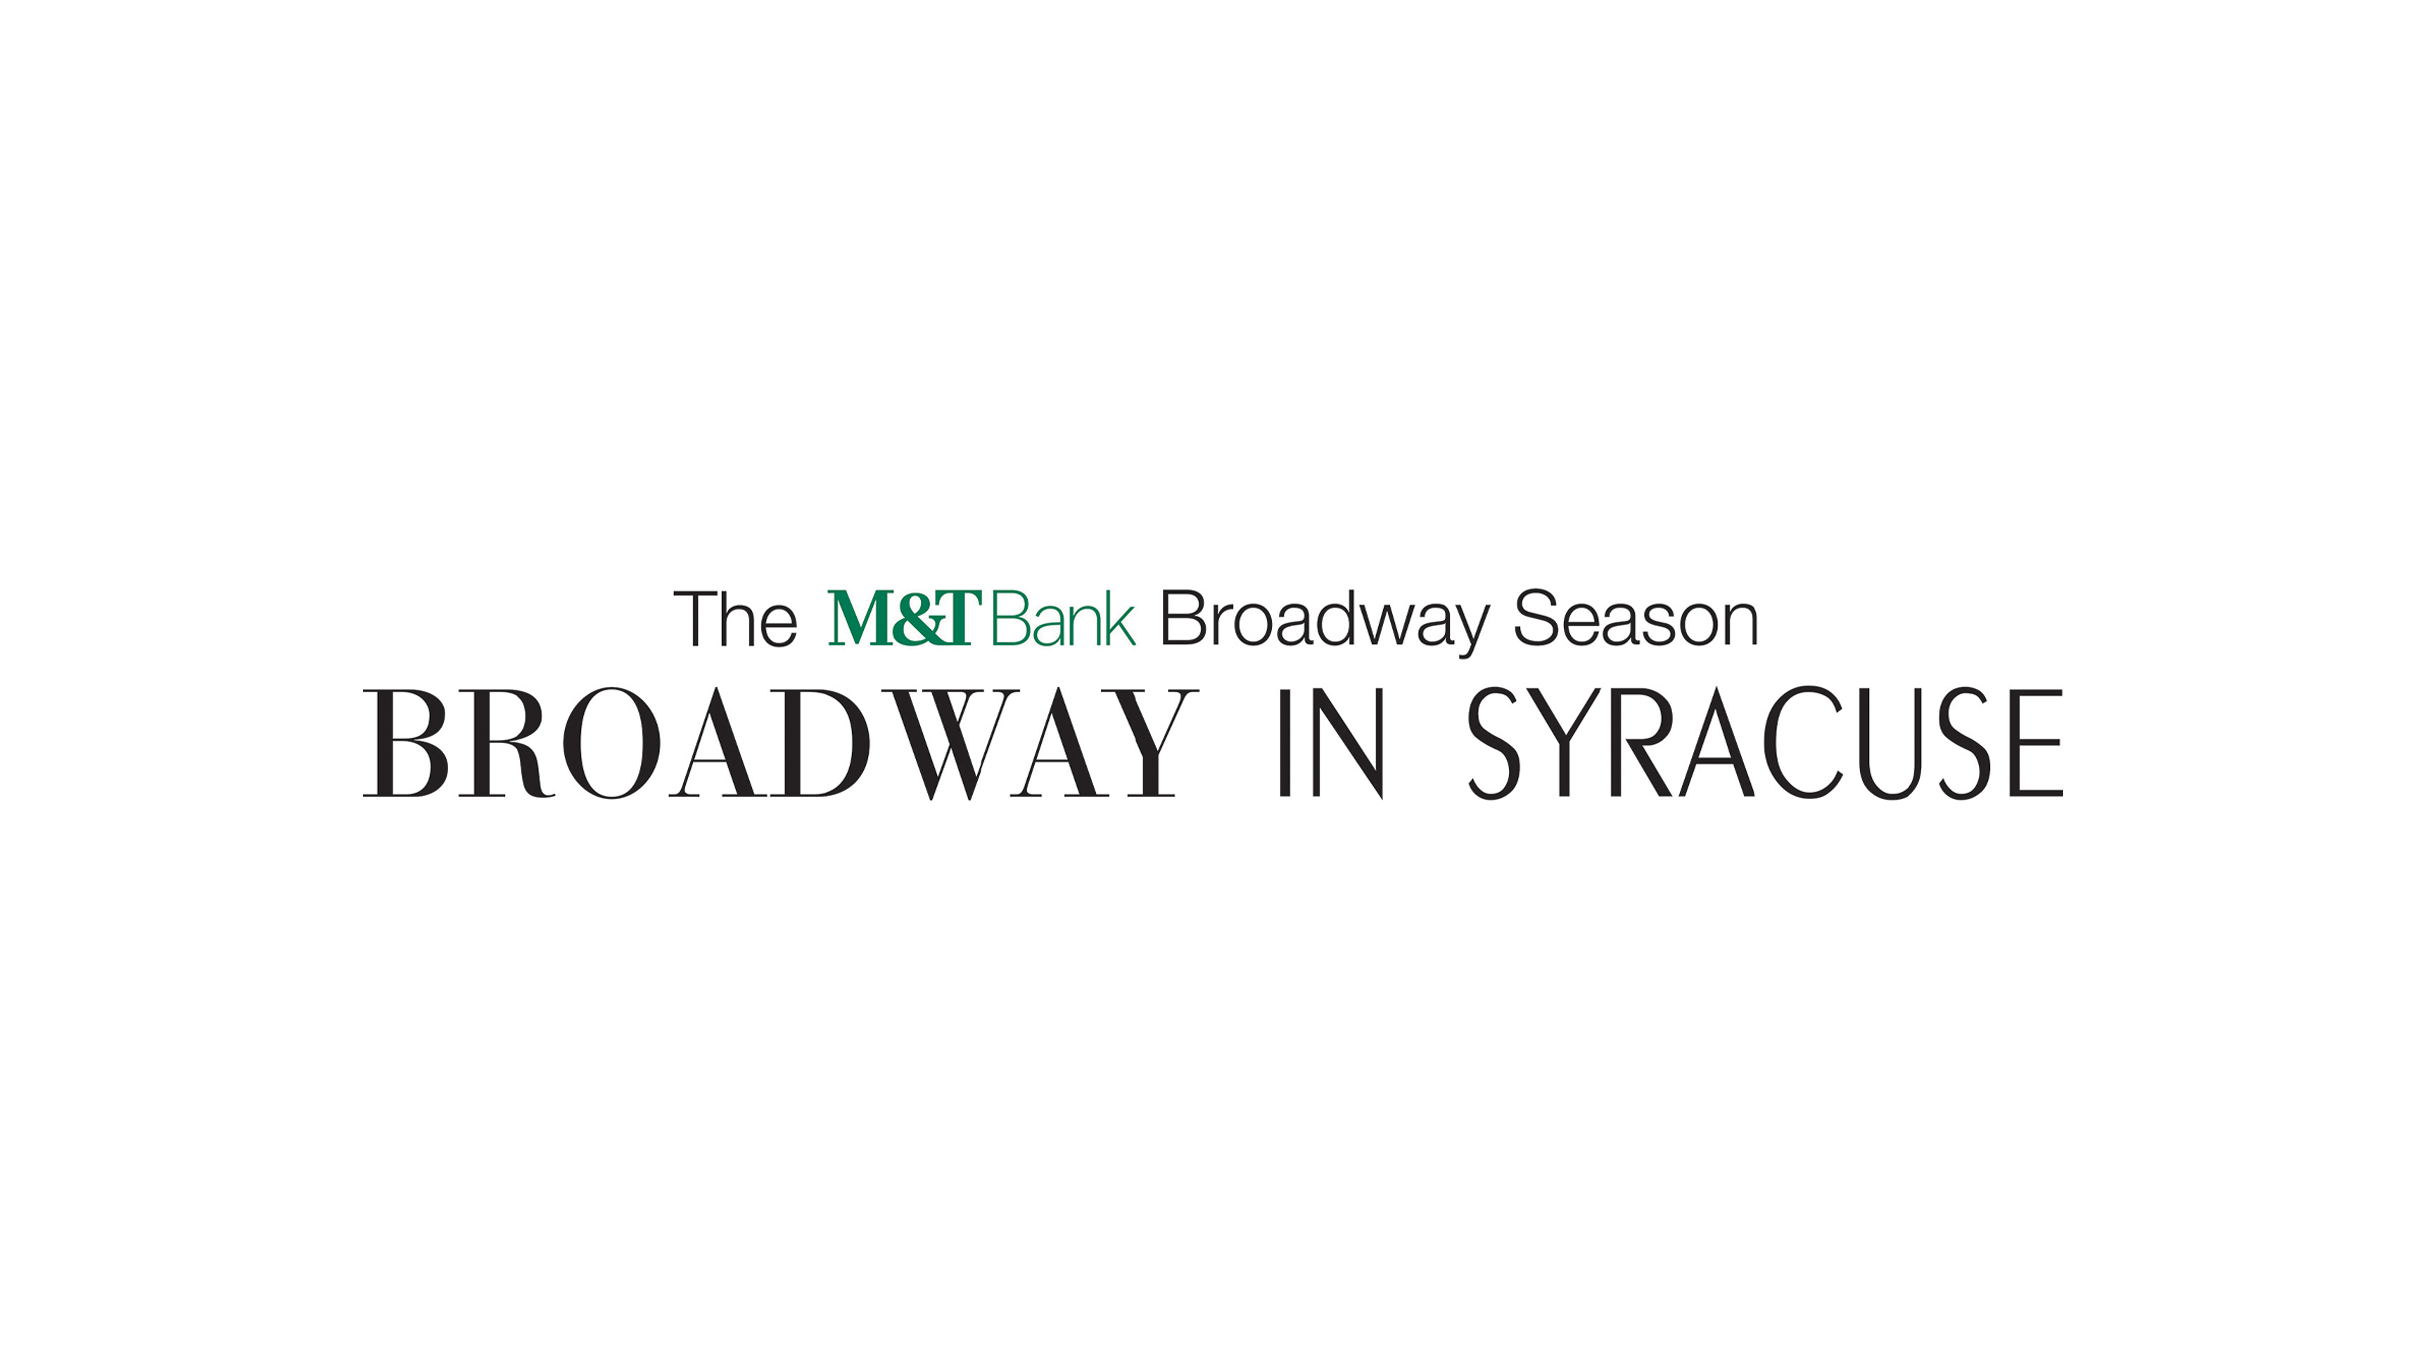 Broadway In Syracuse Season Tickets: Series C